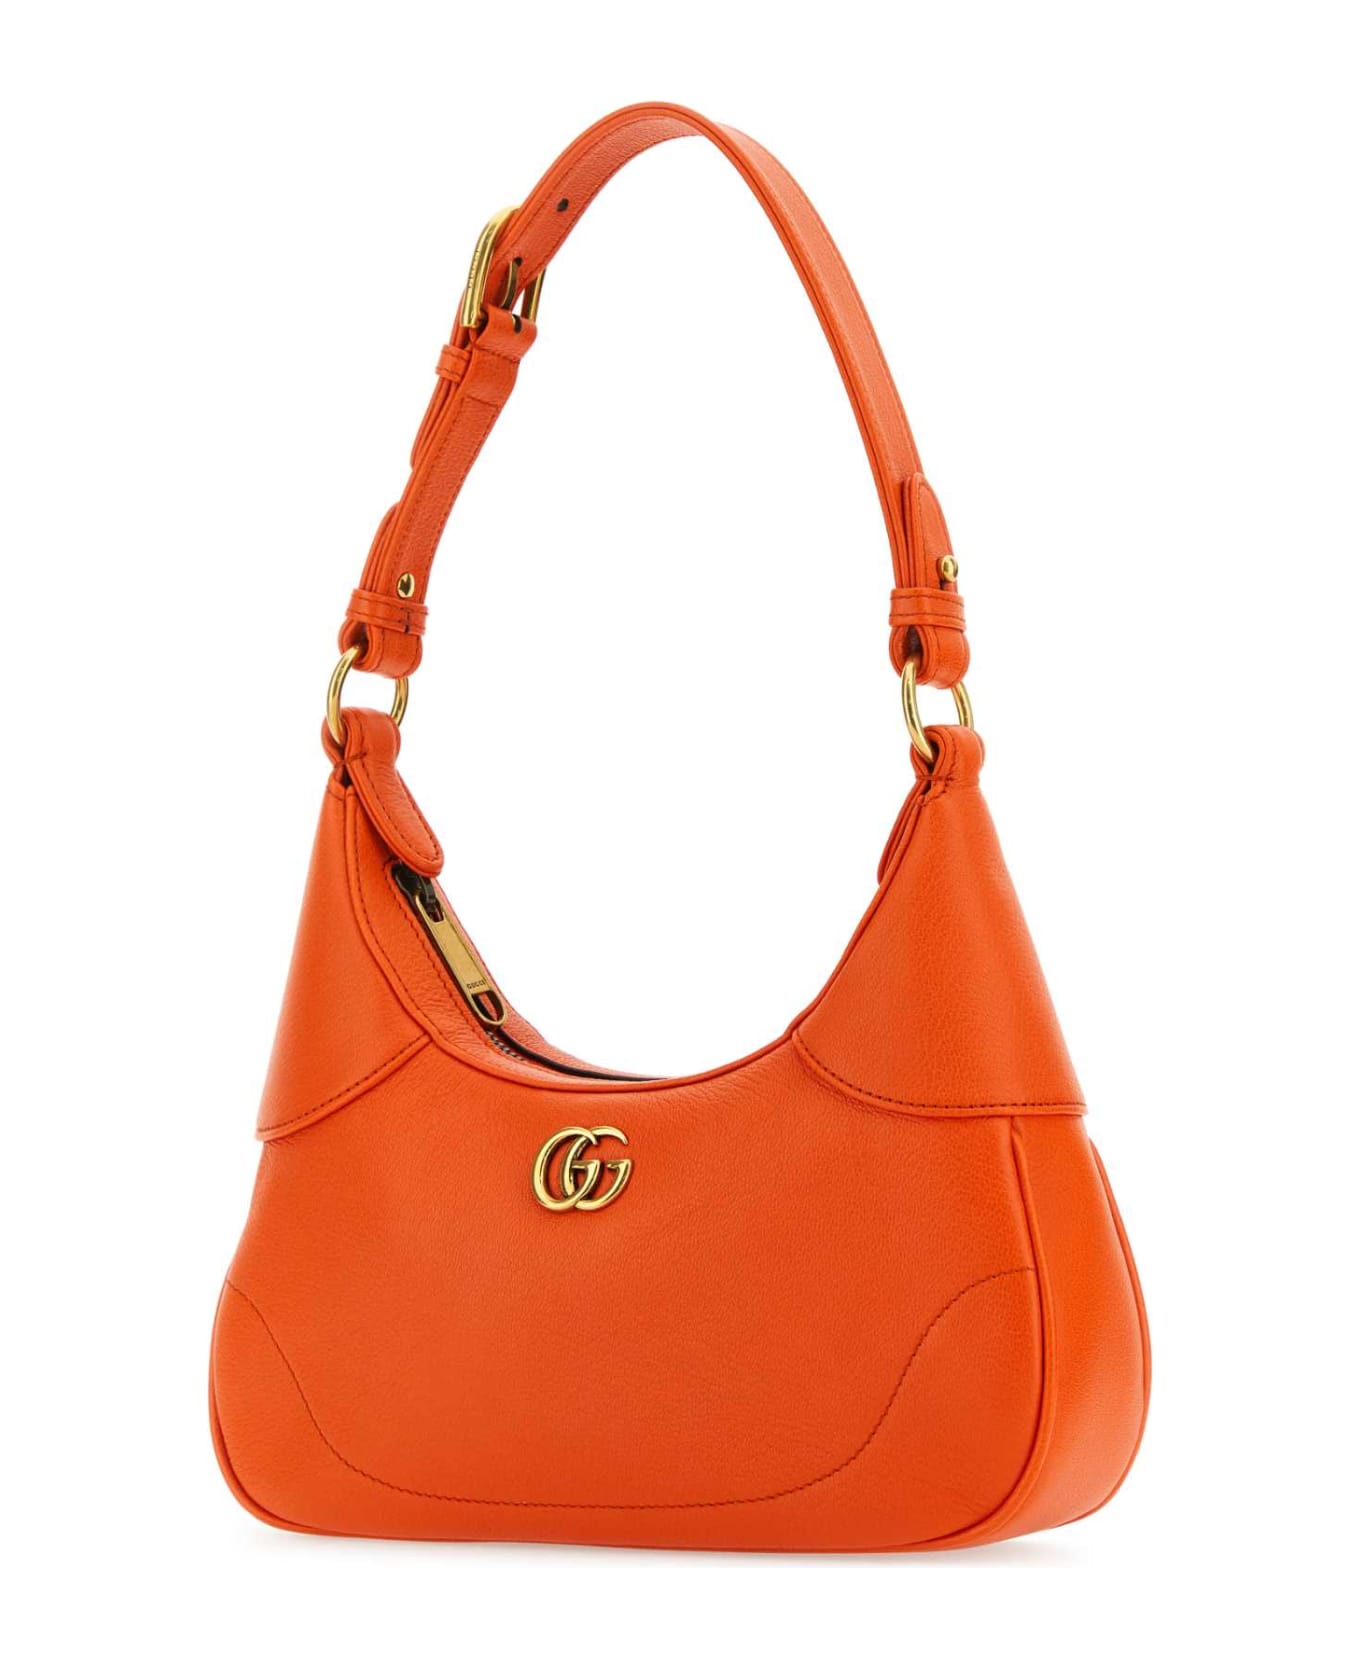 Gucci Orange Leather Small Aphrodite Handbag - DEEPORANGE トートバッグ